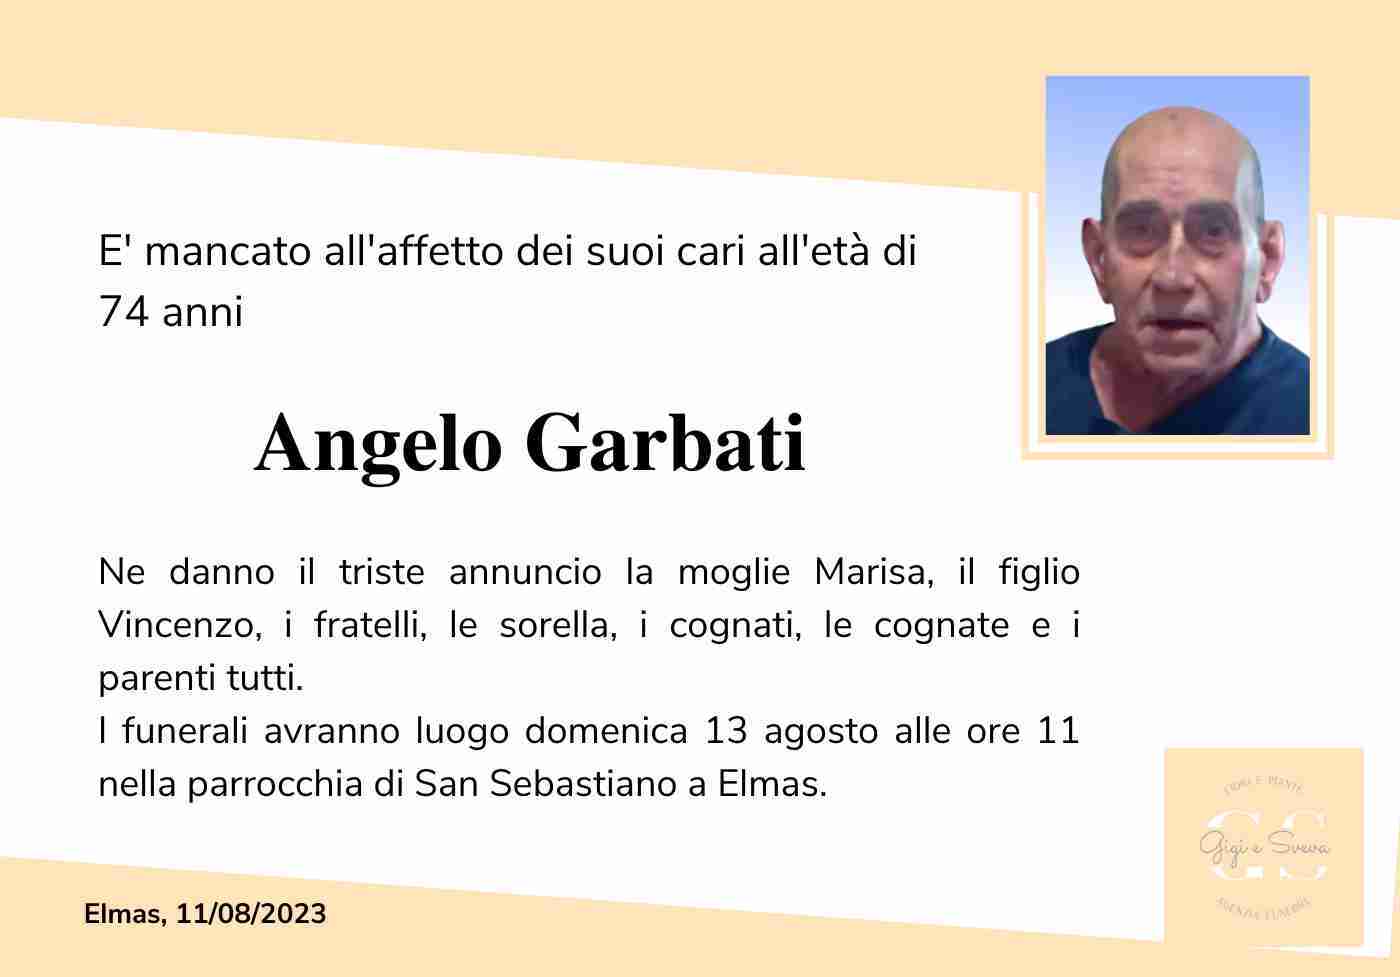 Angelo Garbati